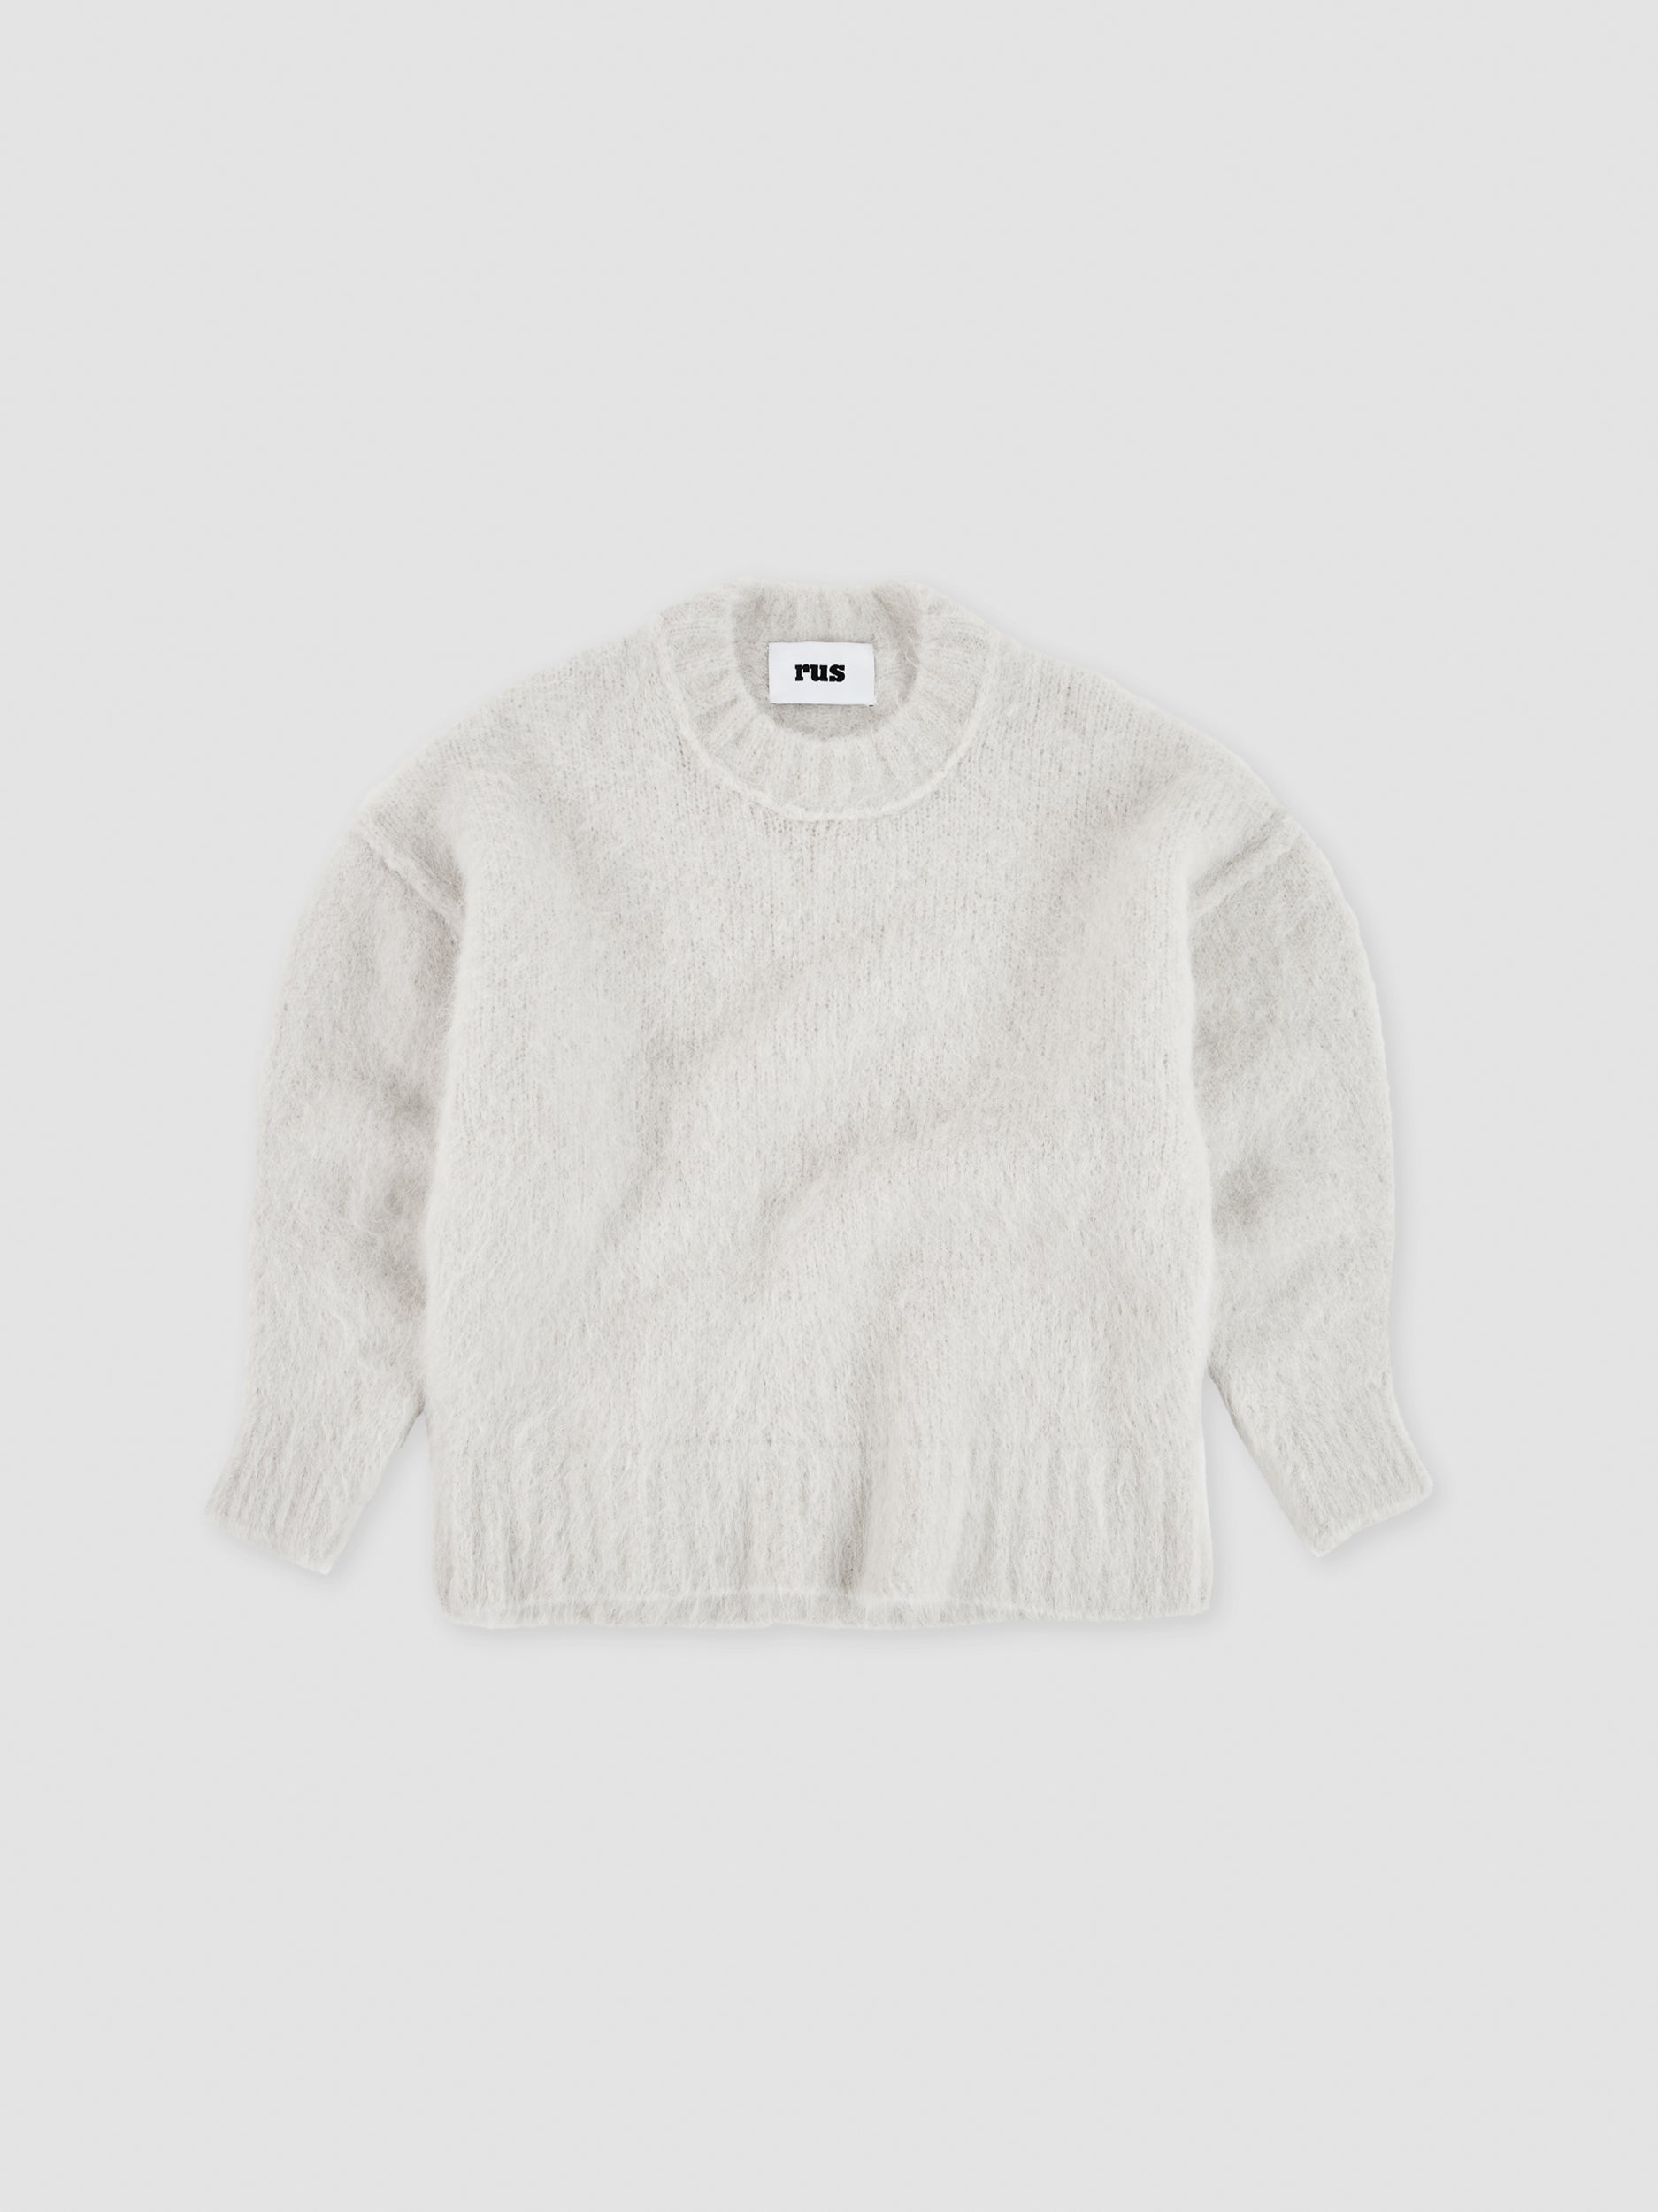 Sakuru sweater